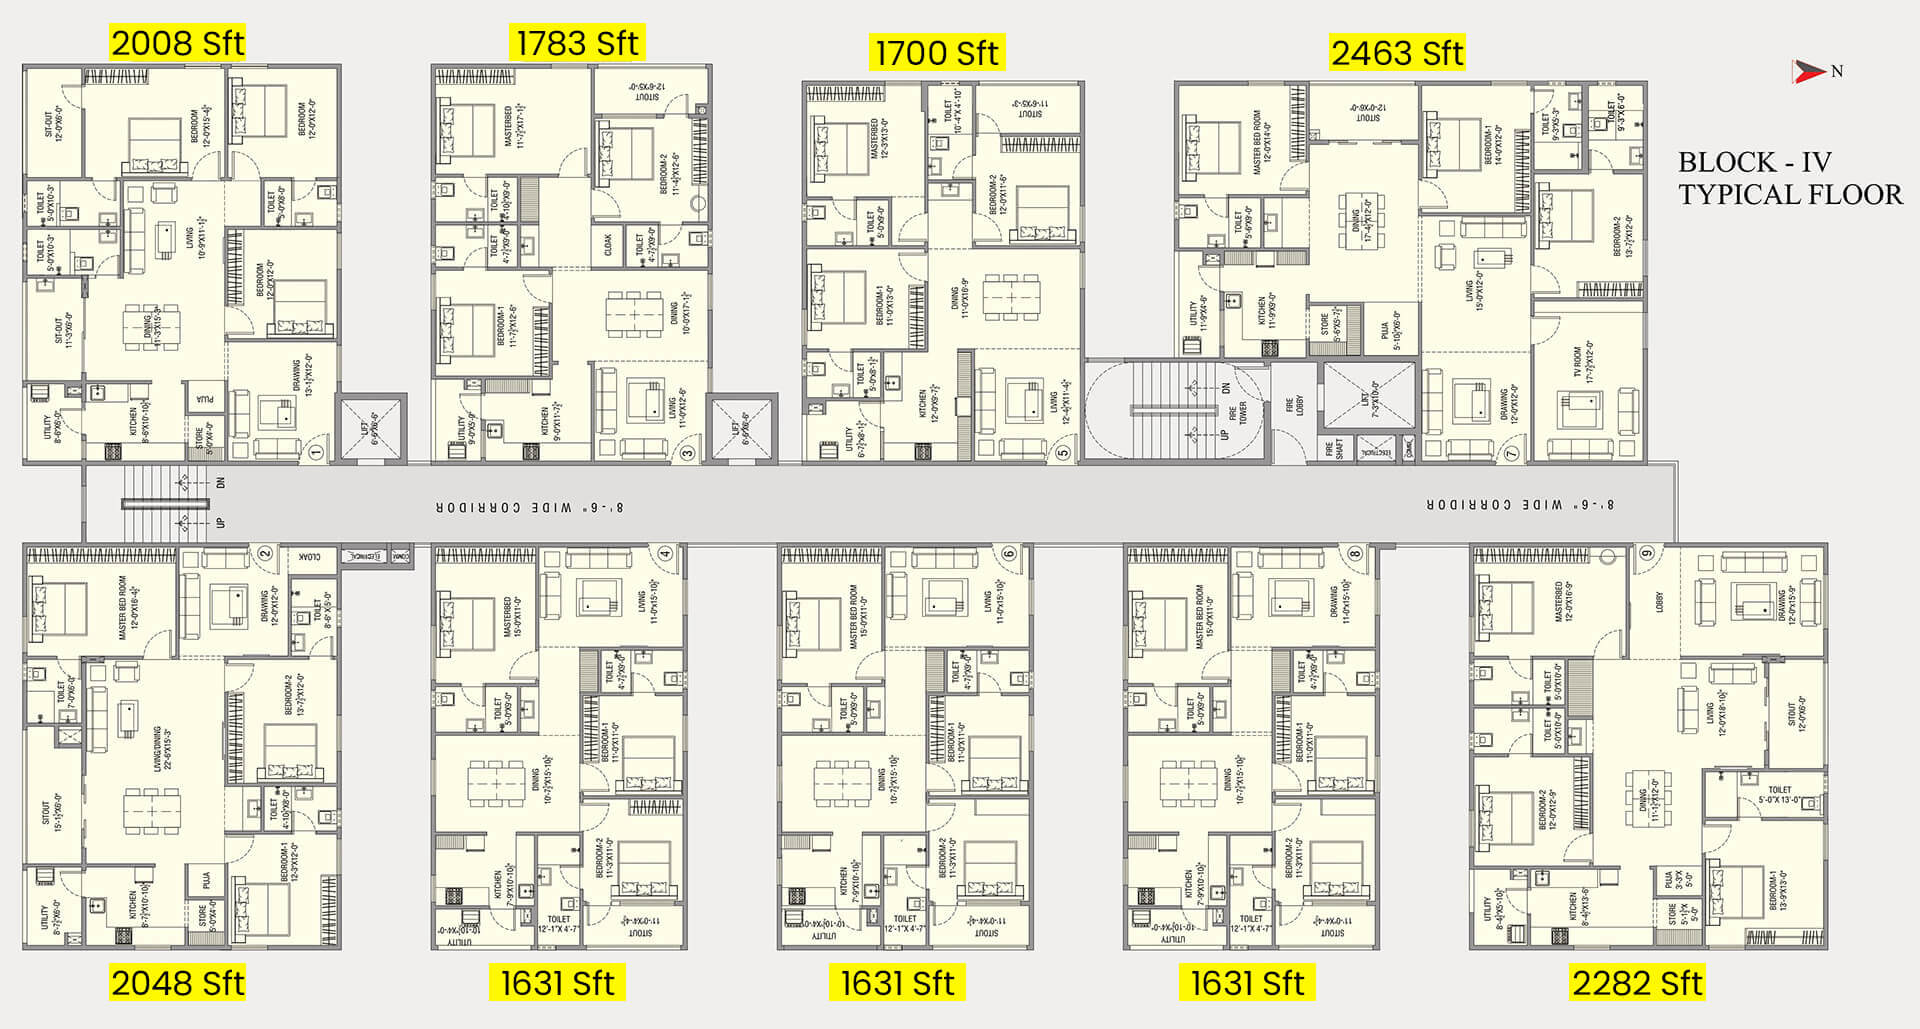 Block IV Typical Floor Plan | MVV Green Field